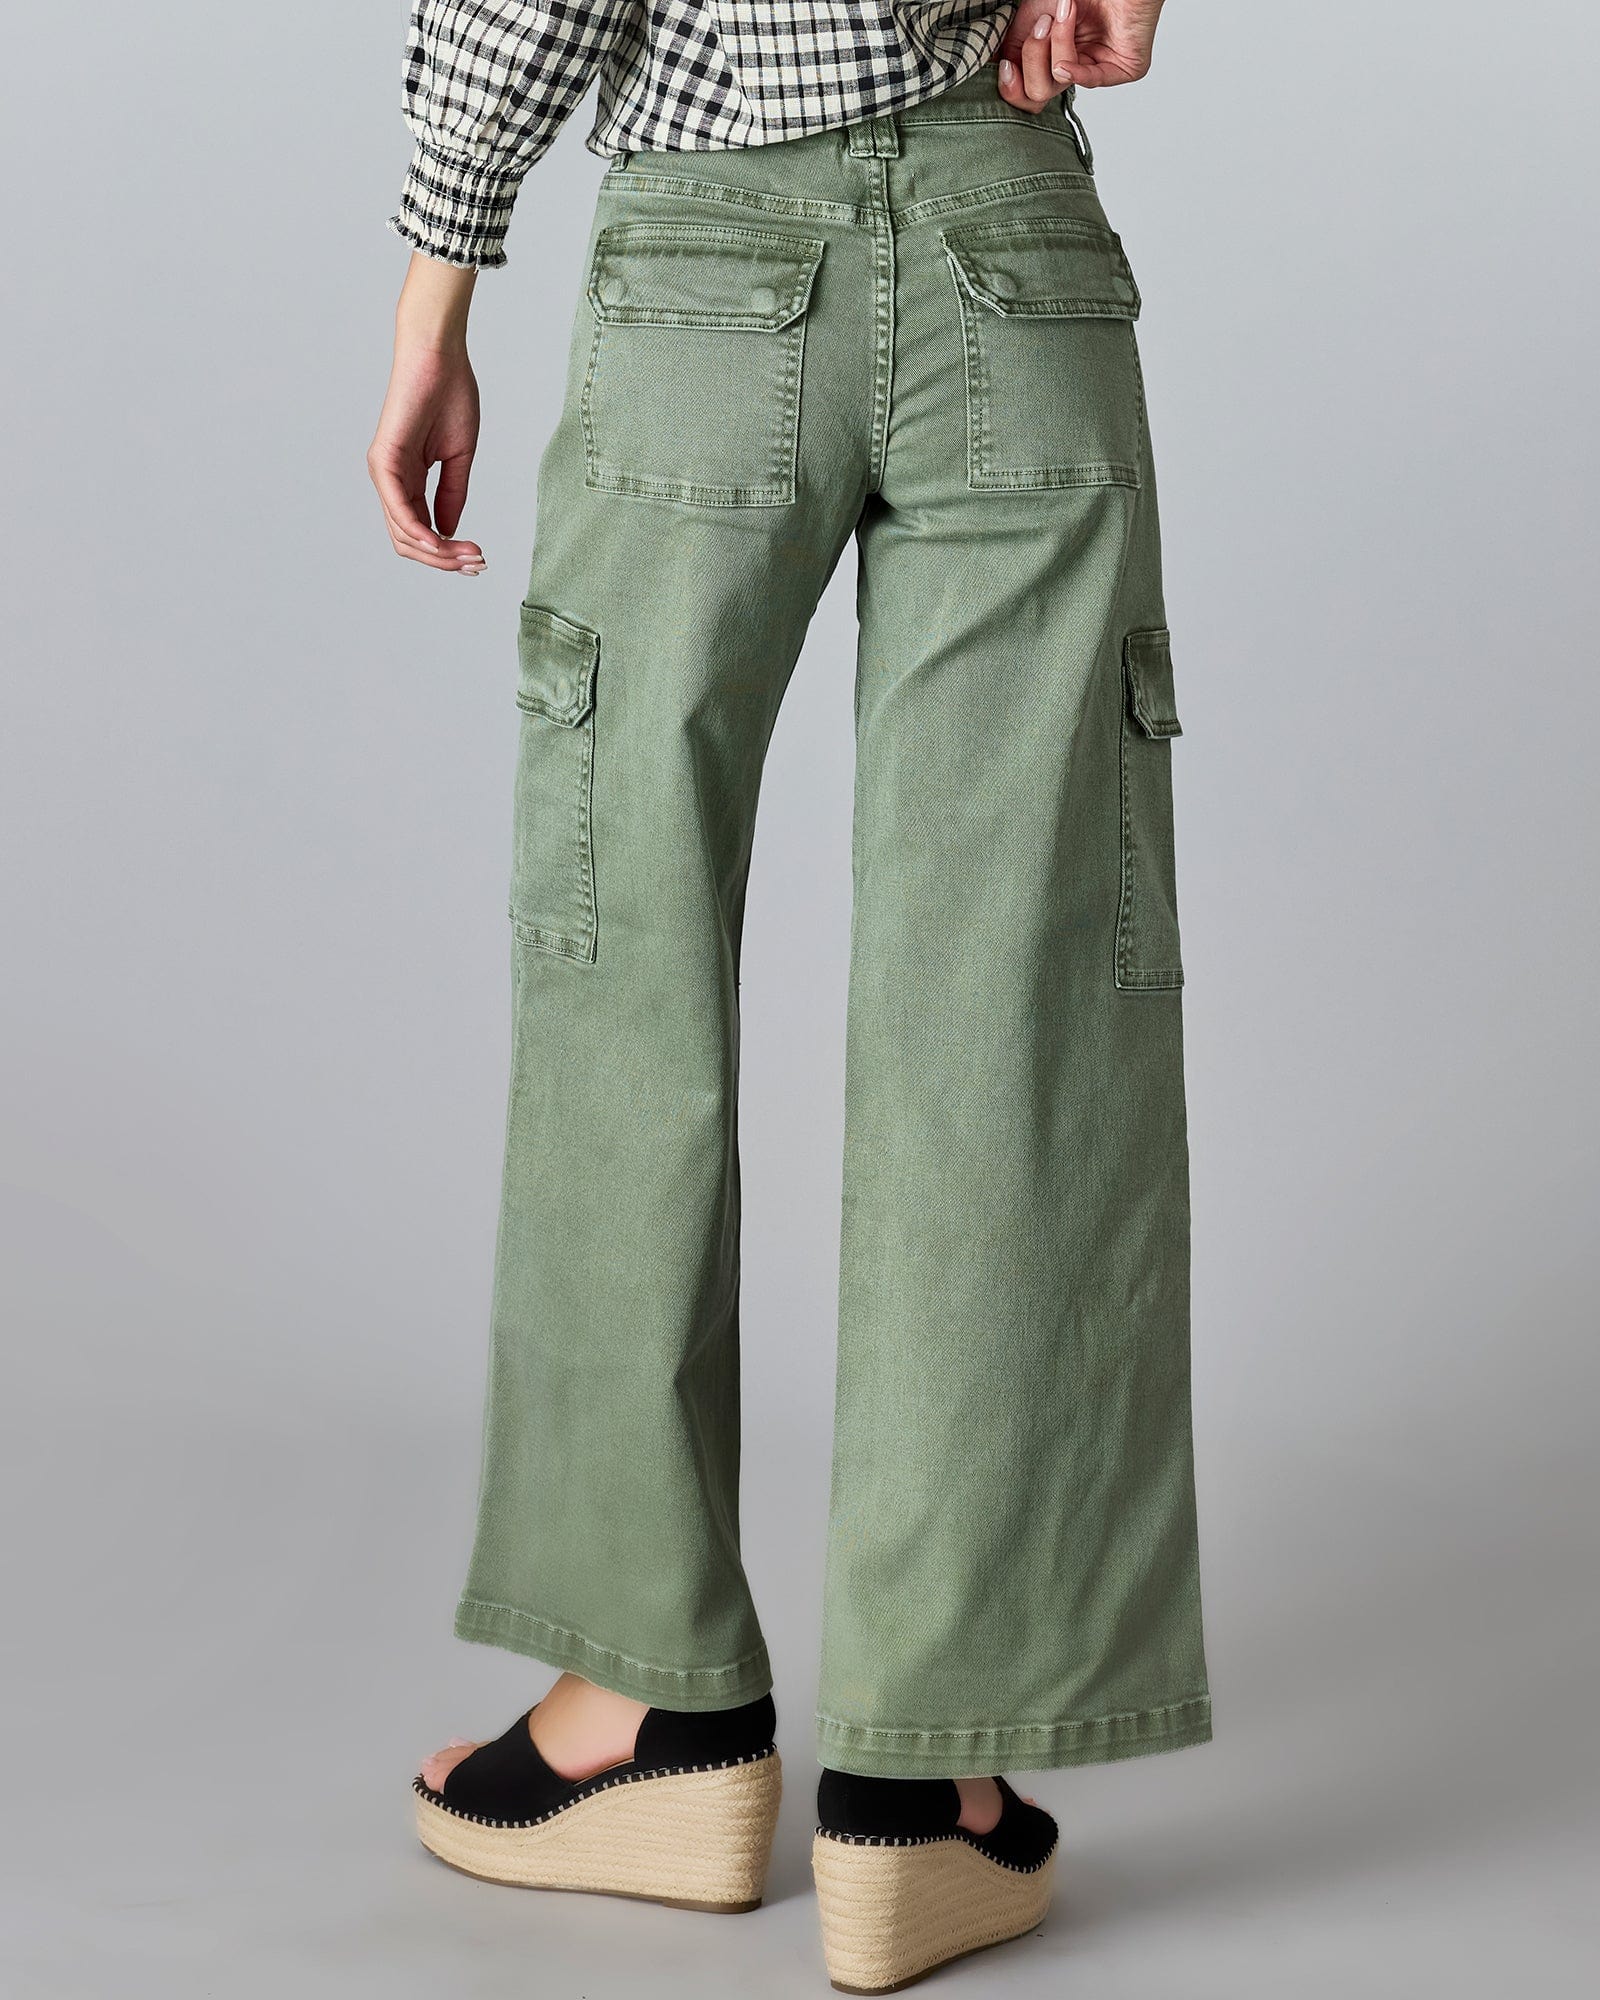 Woman in floor length green cargo jeans.